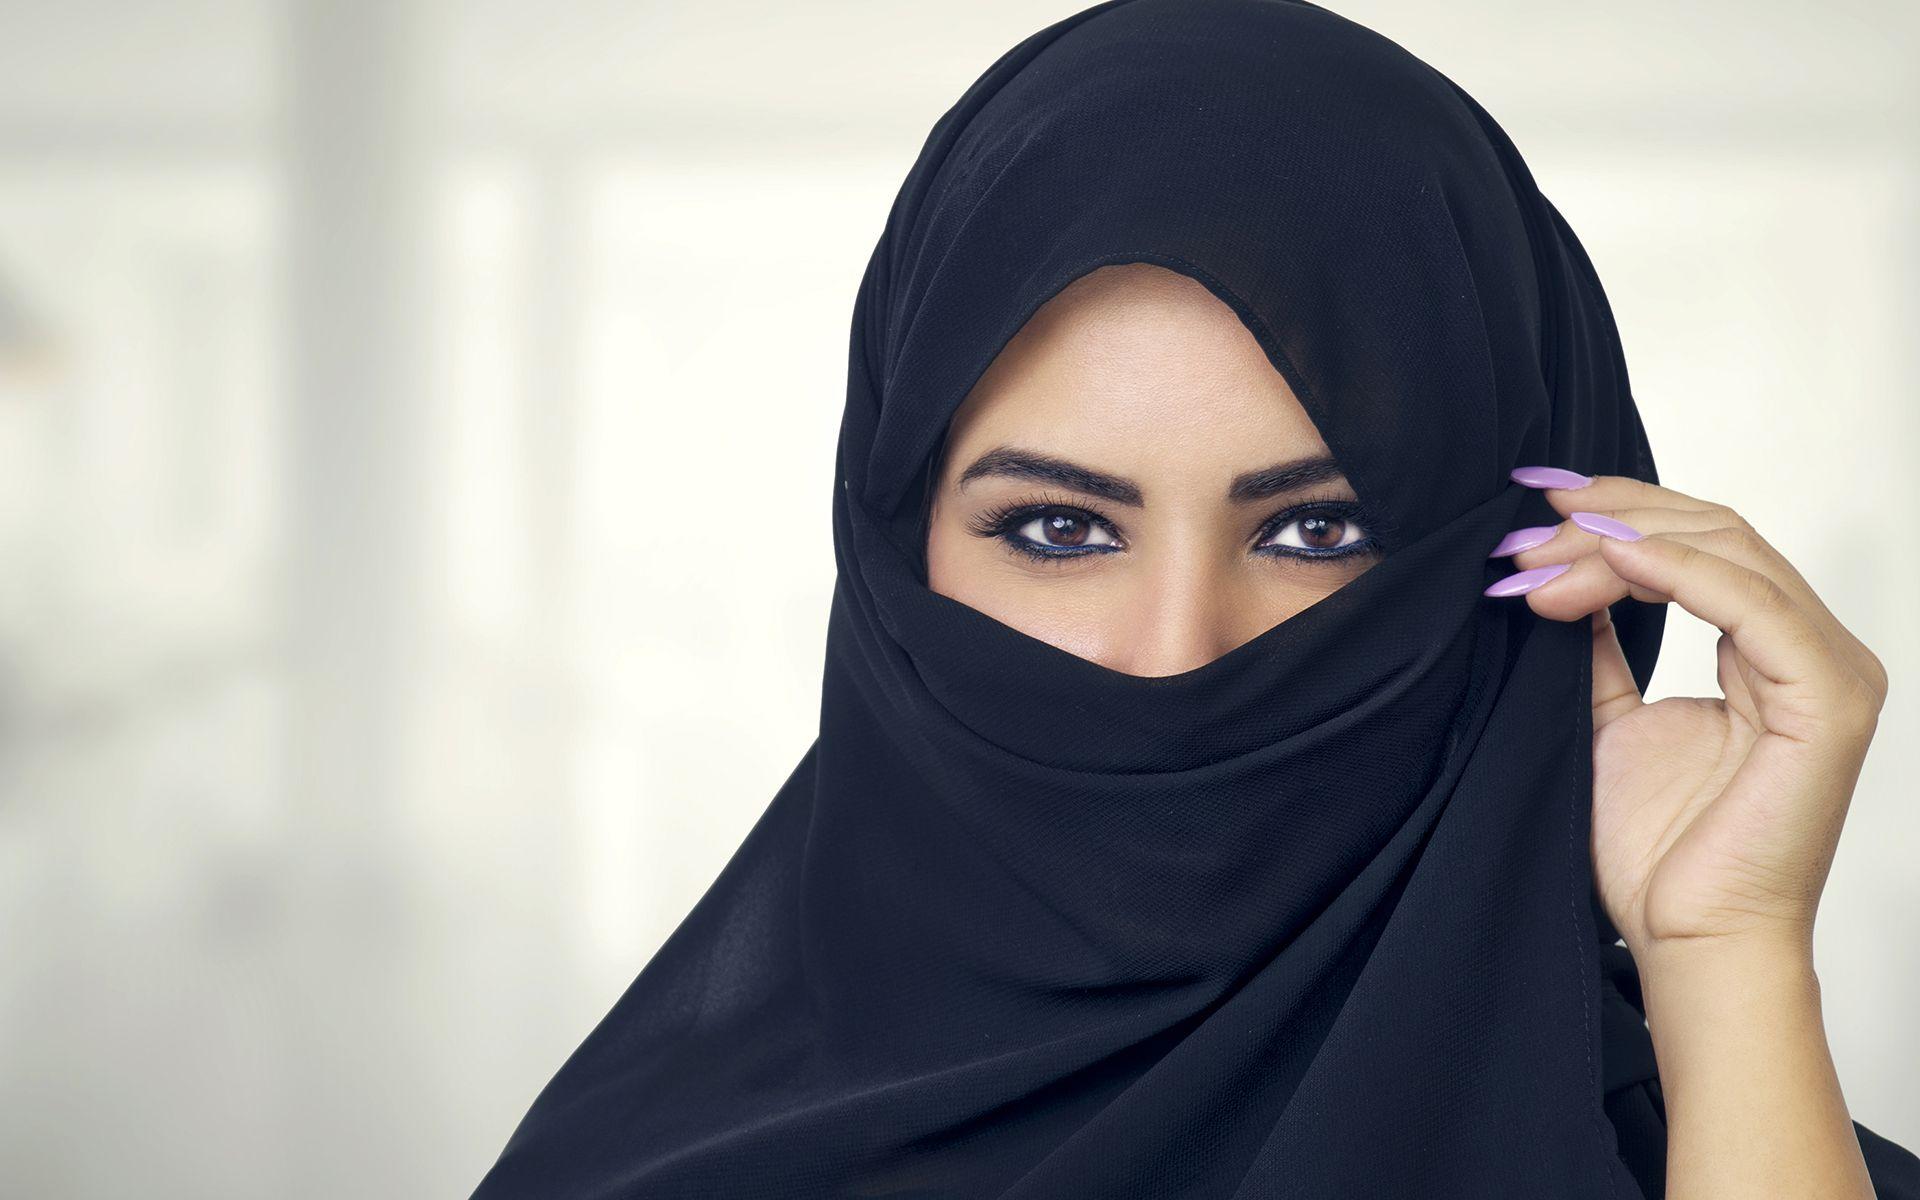 Burka Muslim girl free image download